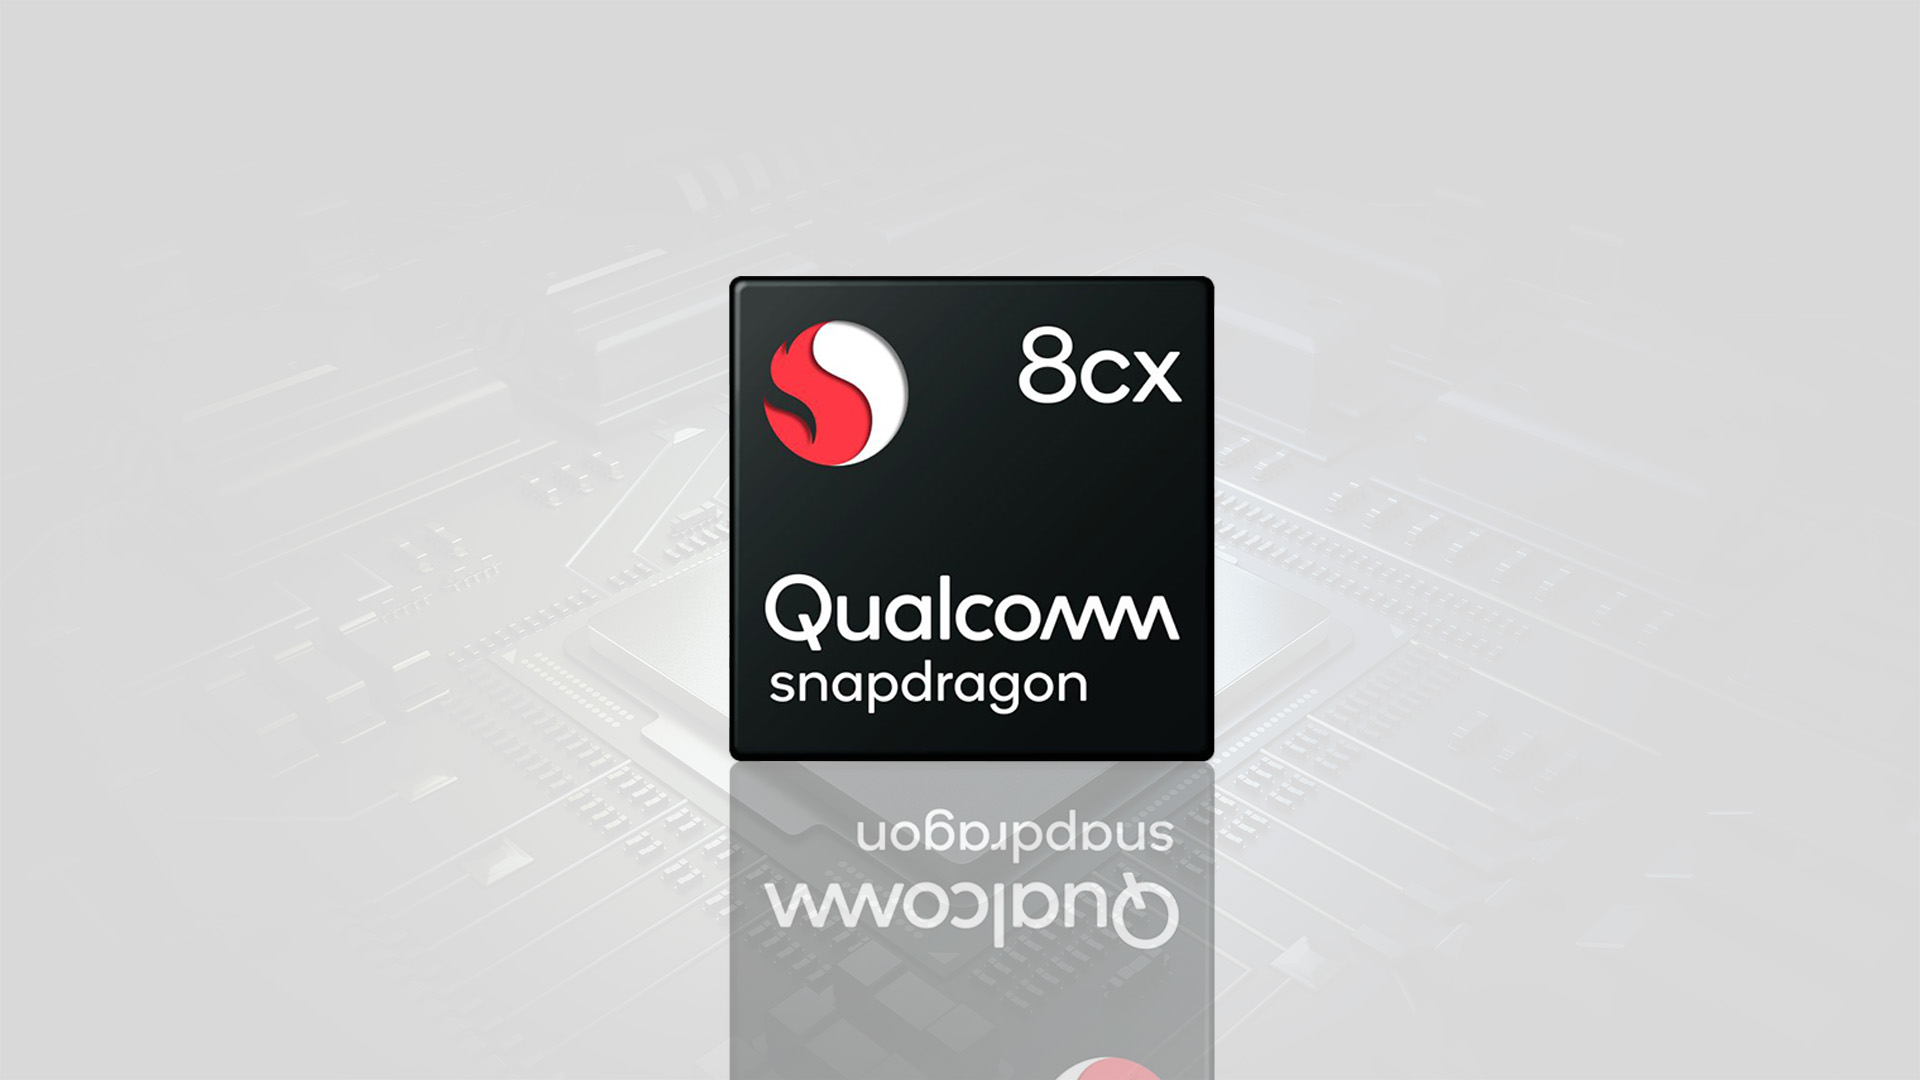 Snapdragon 8cx 1